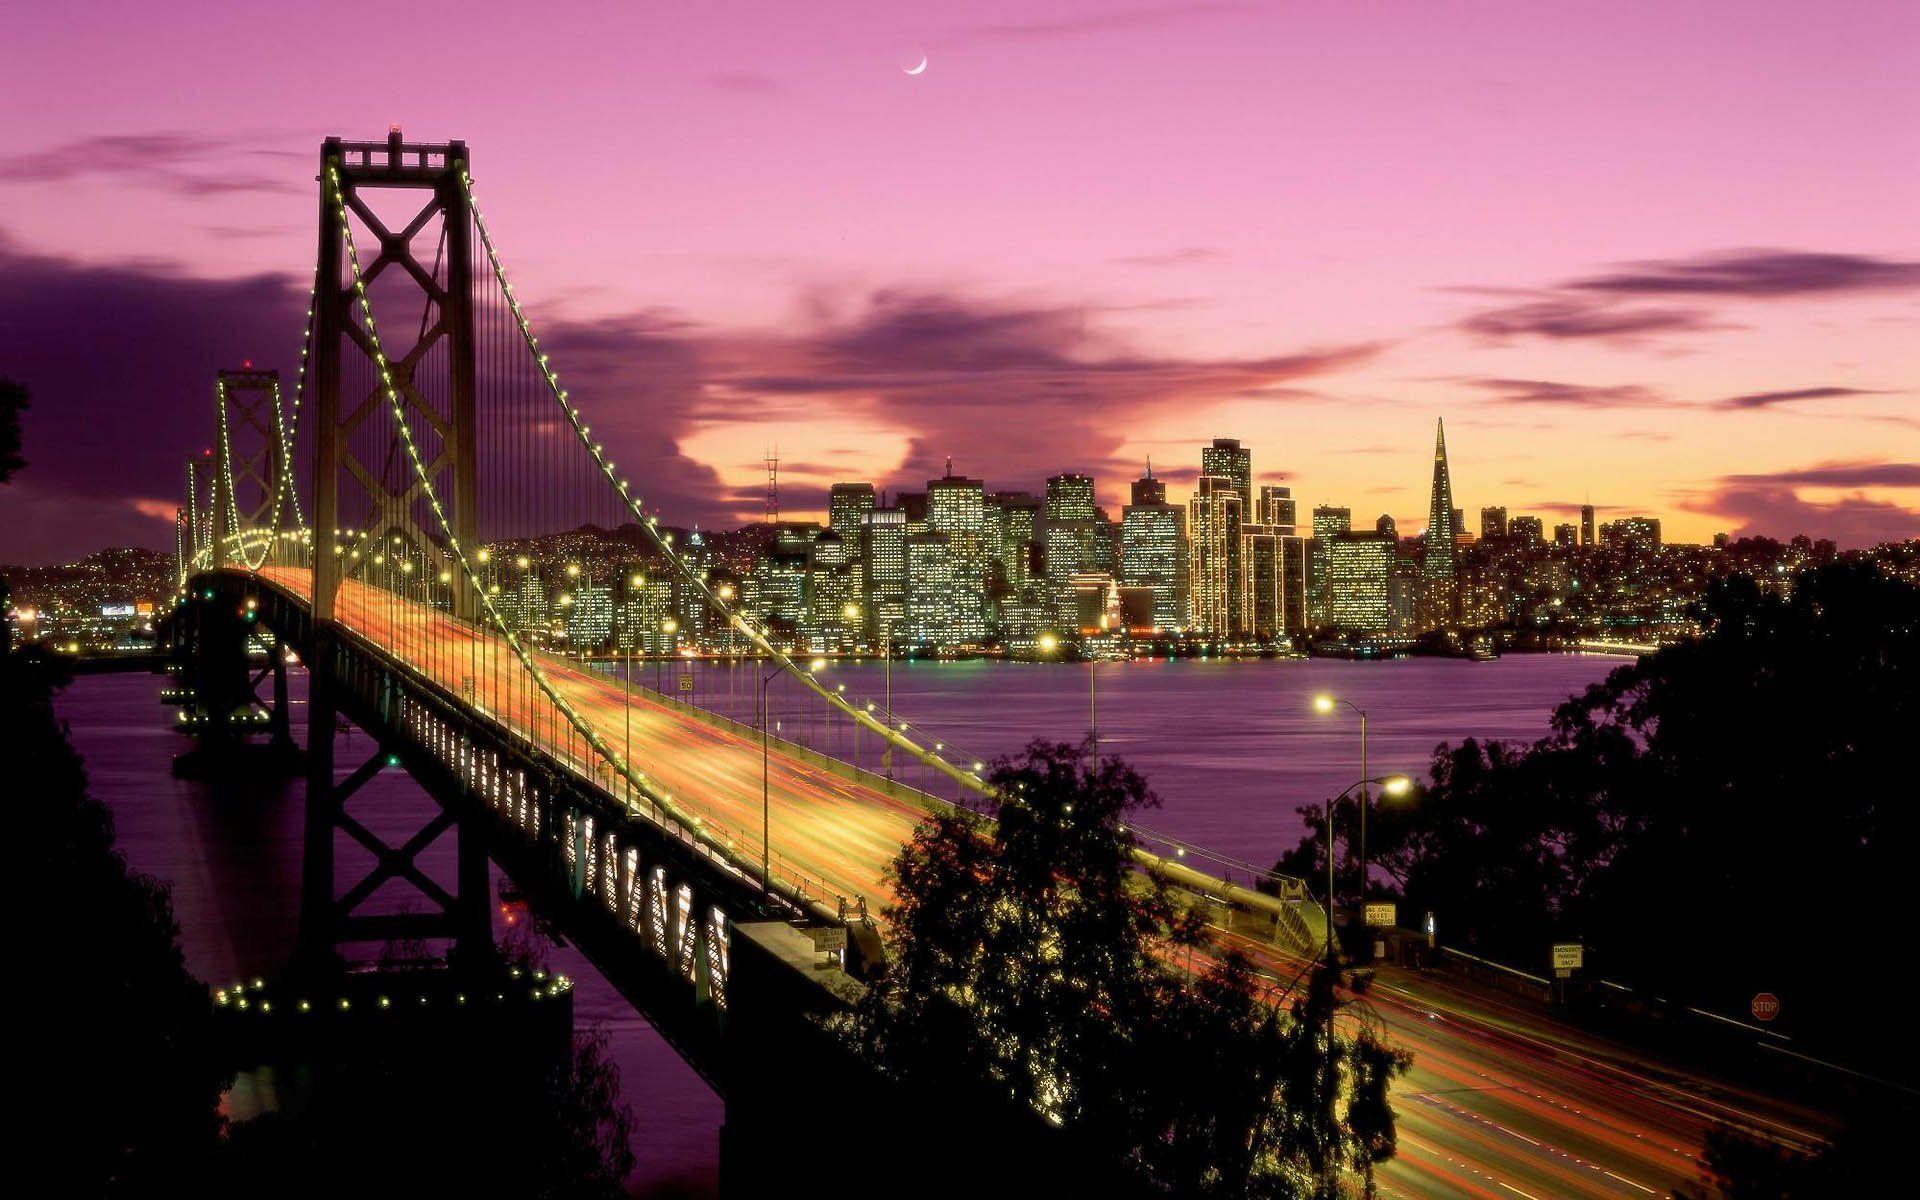 San Francisco Desktop Wallpaper. San Francisco Image. New